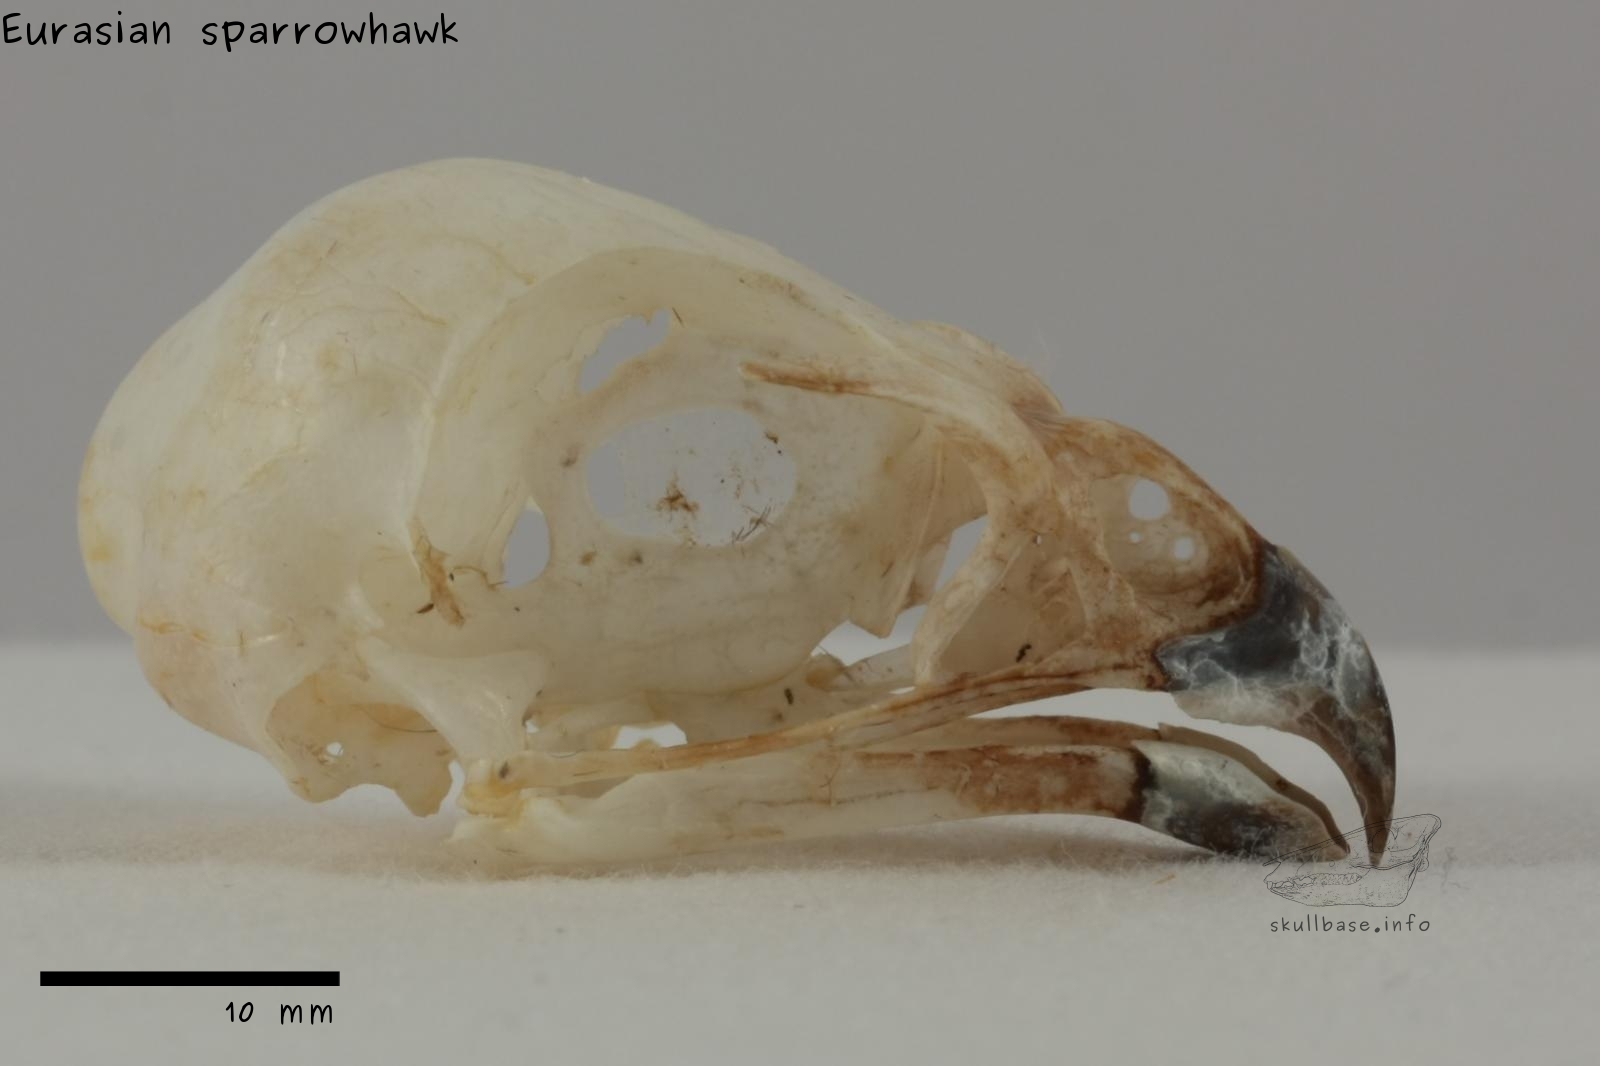 Eurasian sparrowhawk (Accipiter nisus) skull lateral view